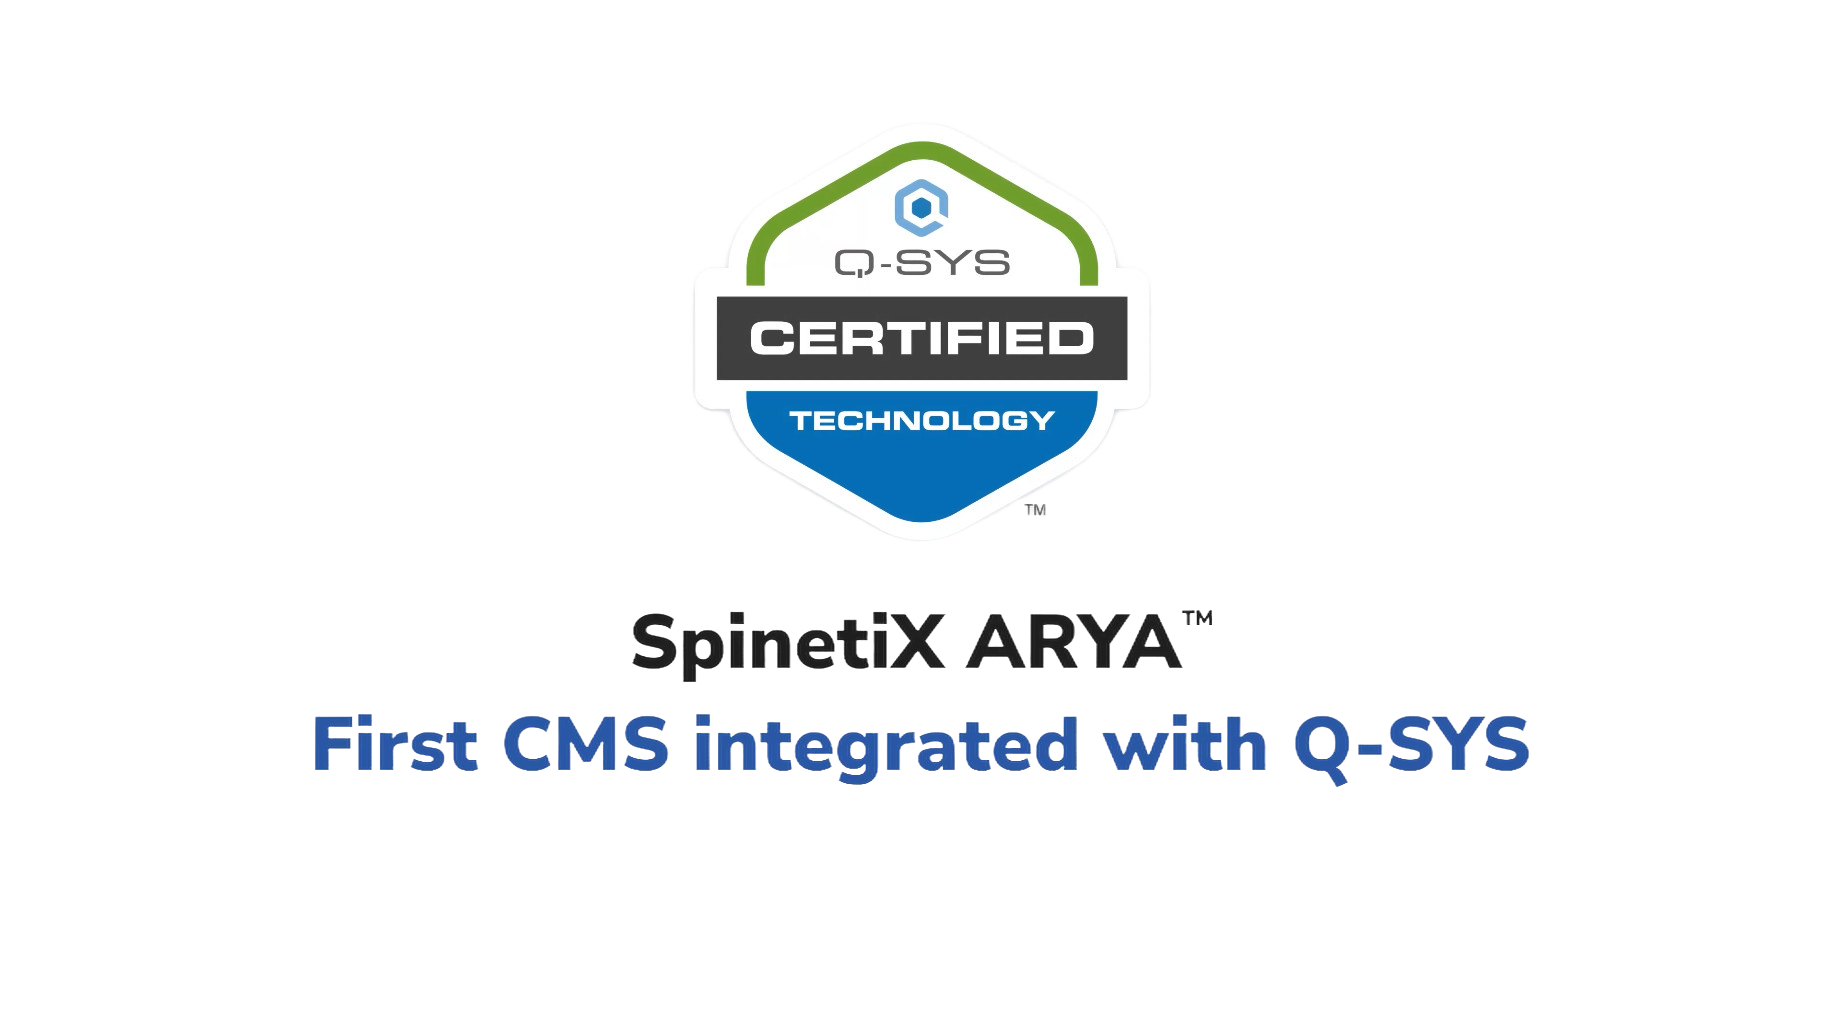 q-sys certified plugin in spinetix arya digital signage cms